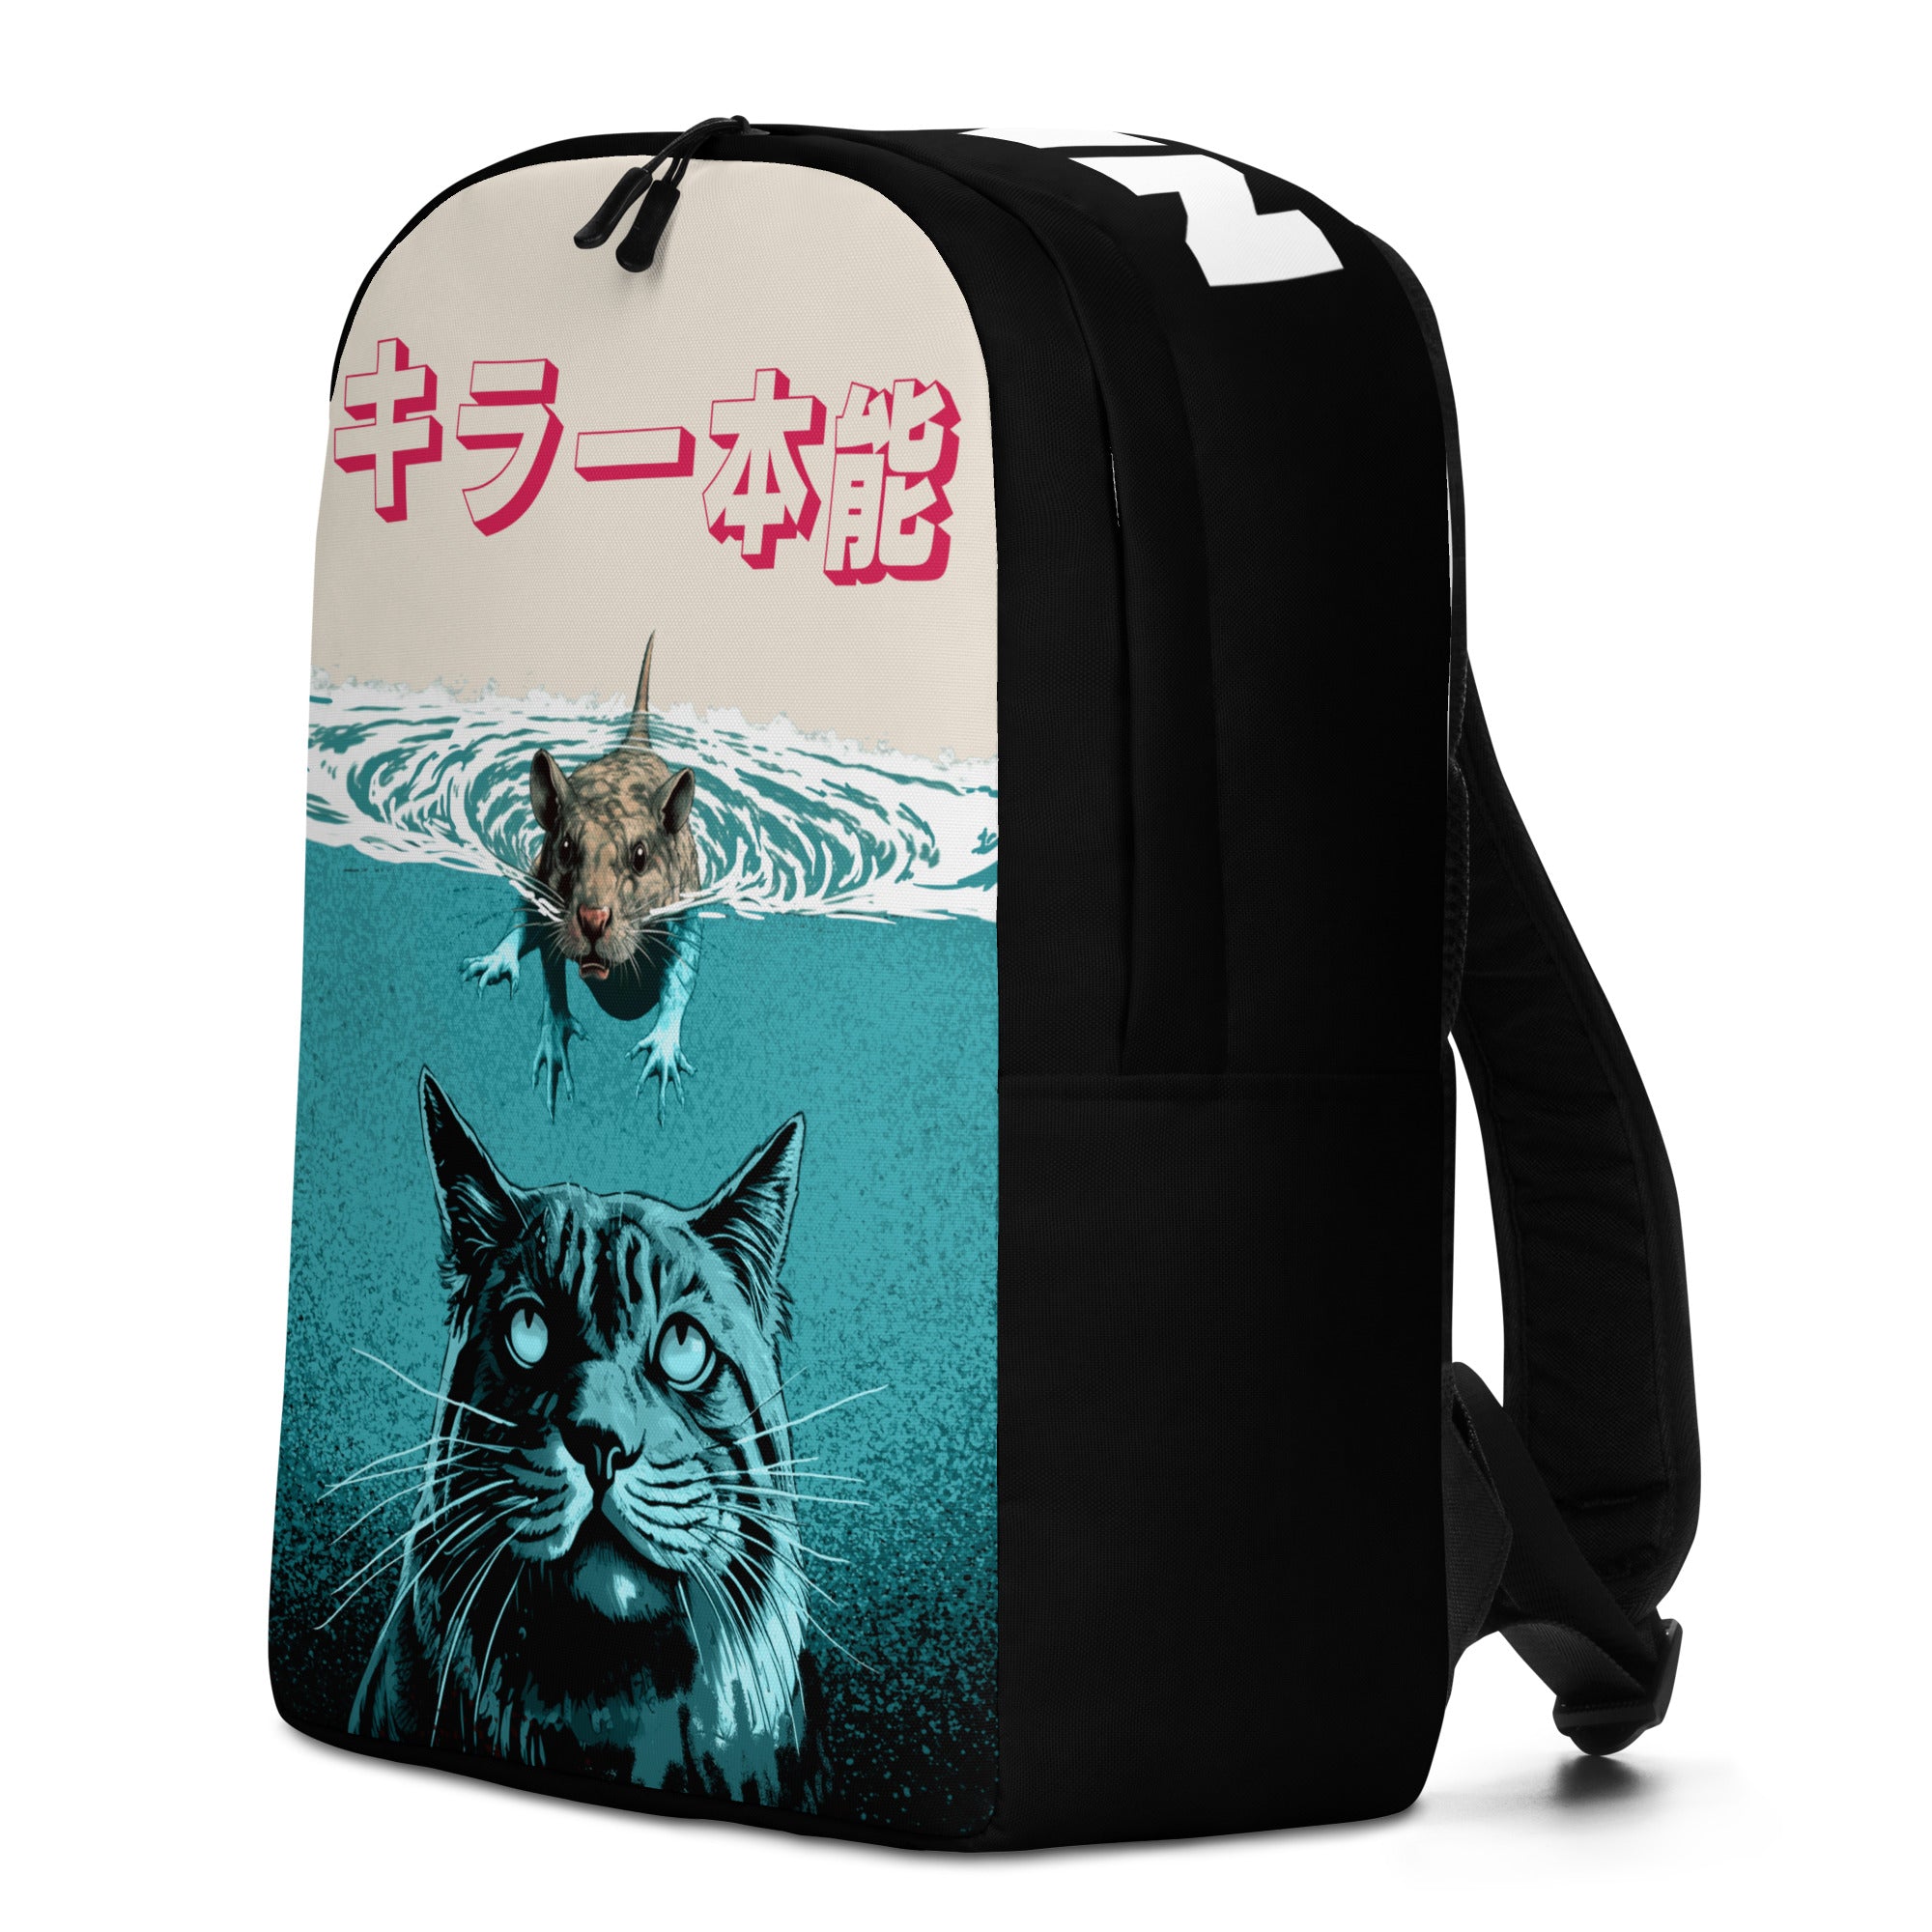 Shop Japanese Anime School Bag online | Lazada.com.ph